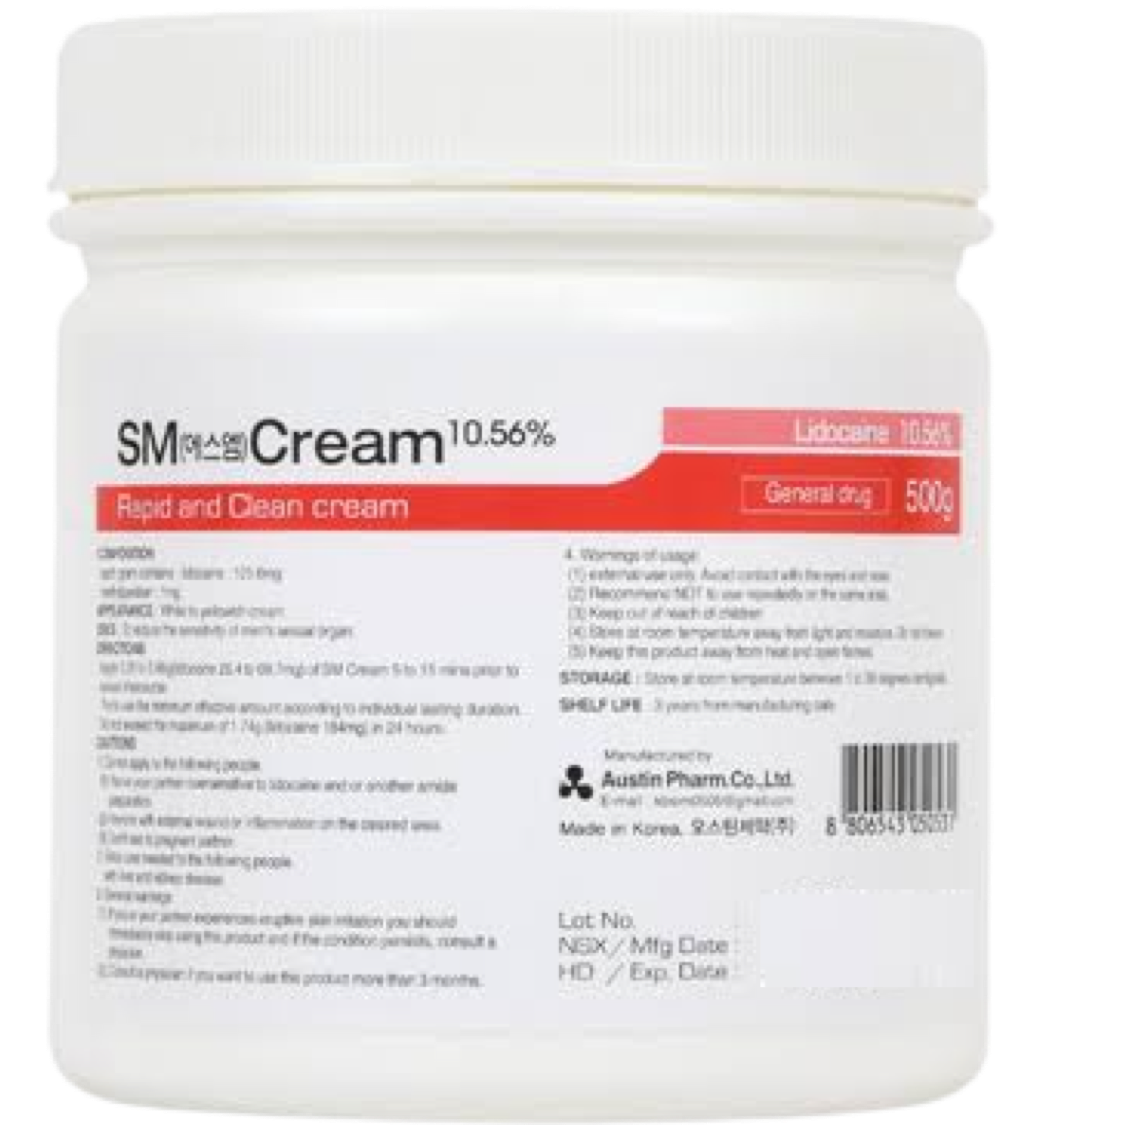 SM Lido Cream 10.56% ยาชาแบบทา